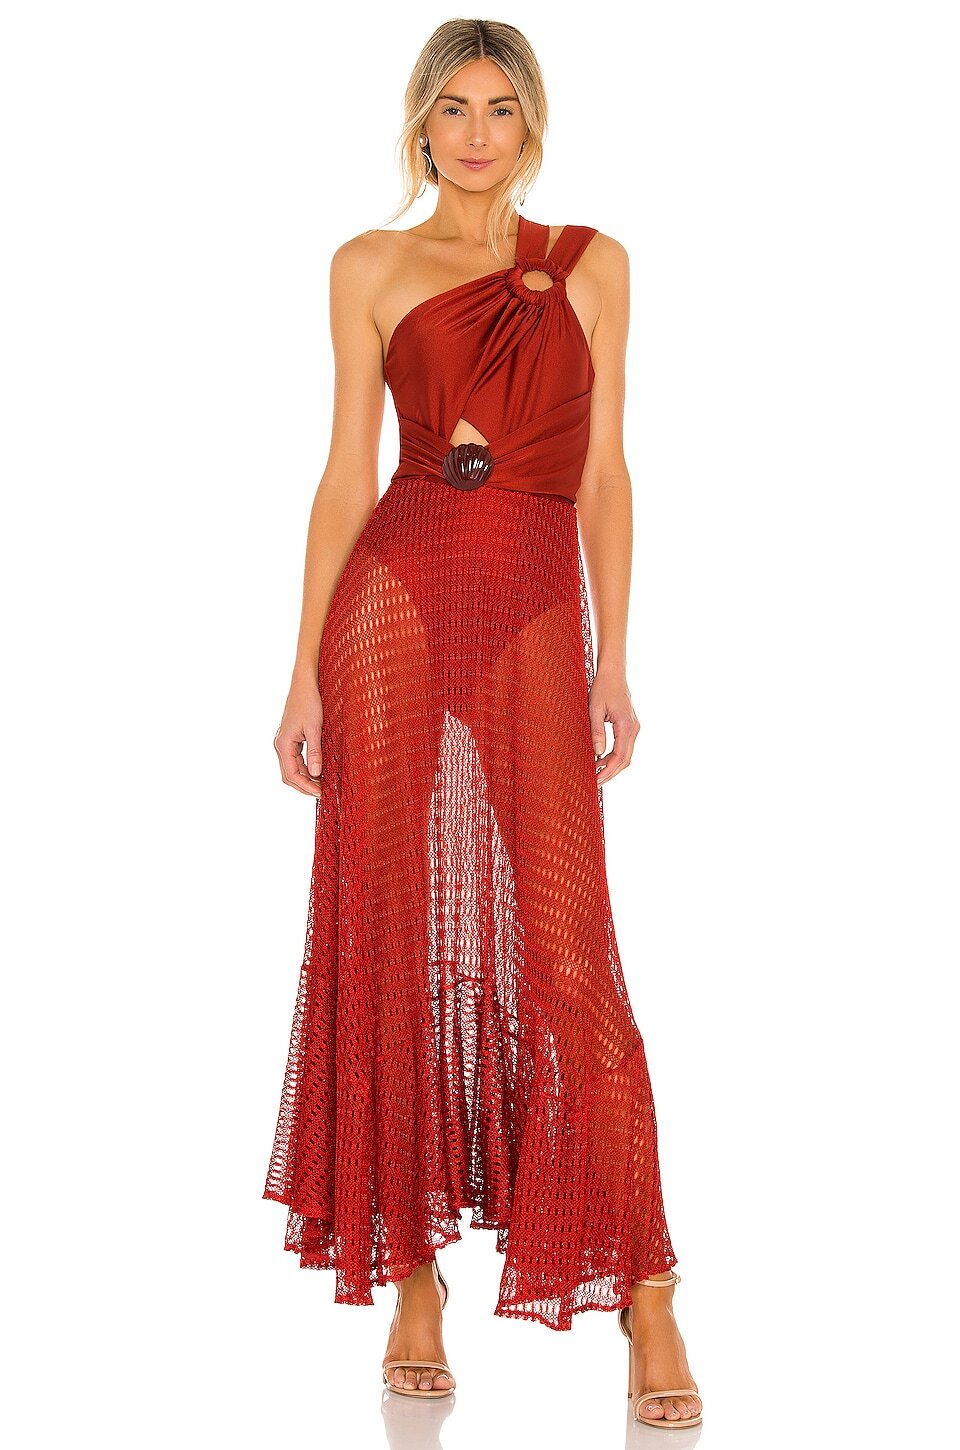 PatBo - Asymmetric Netted Beach Dress - Red